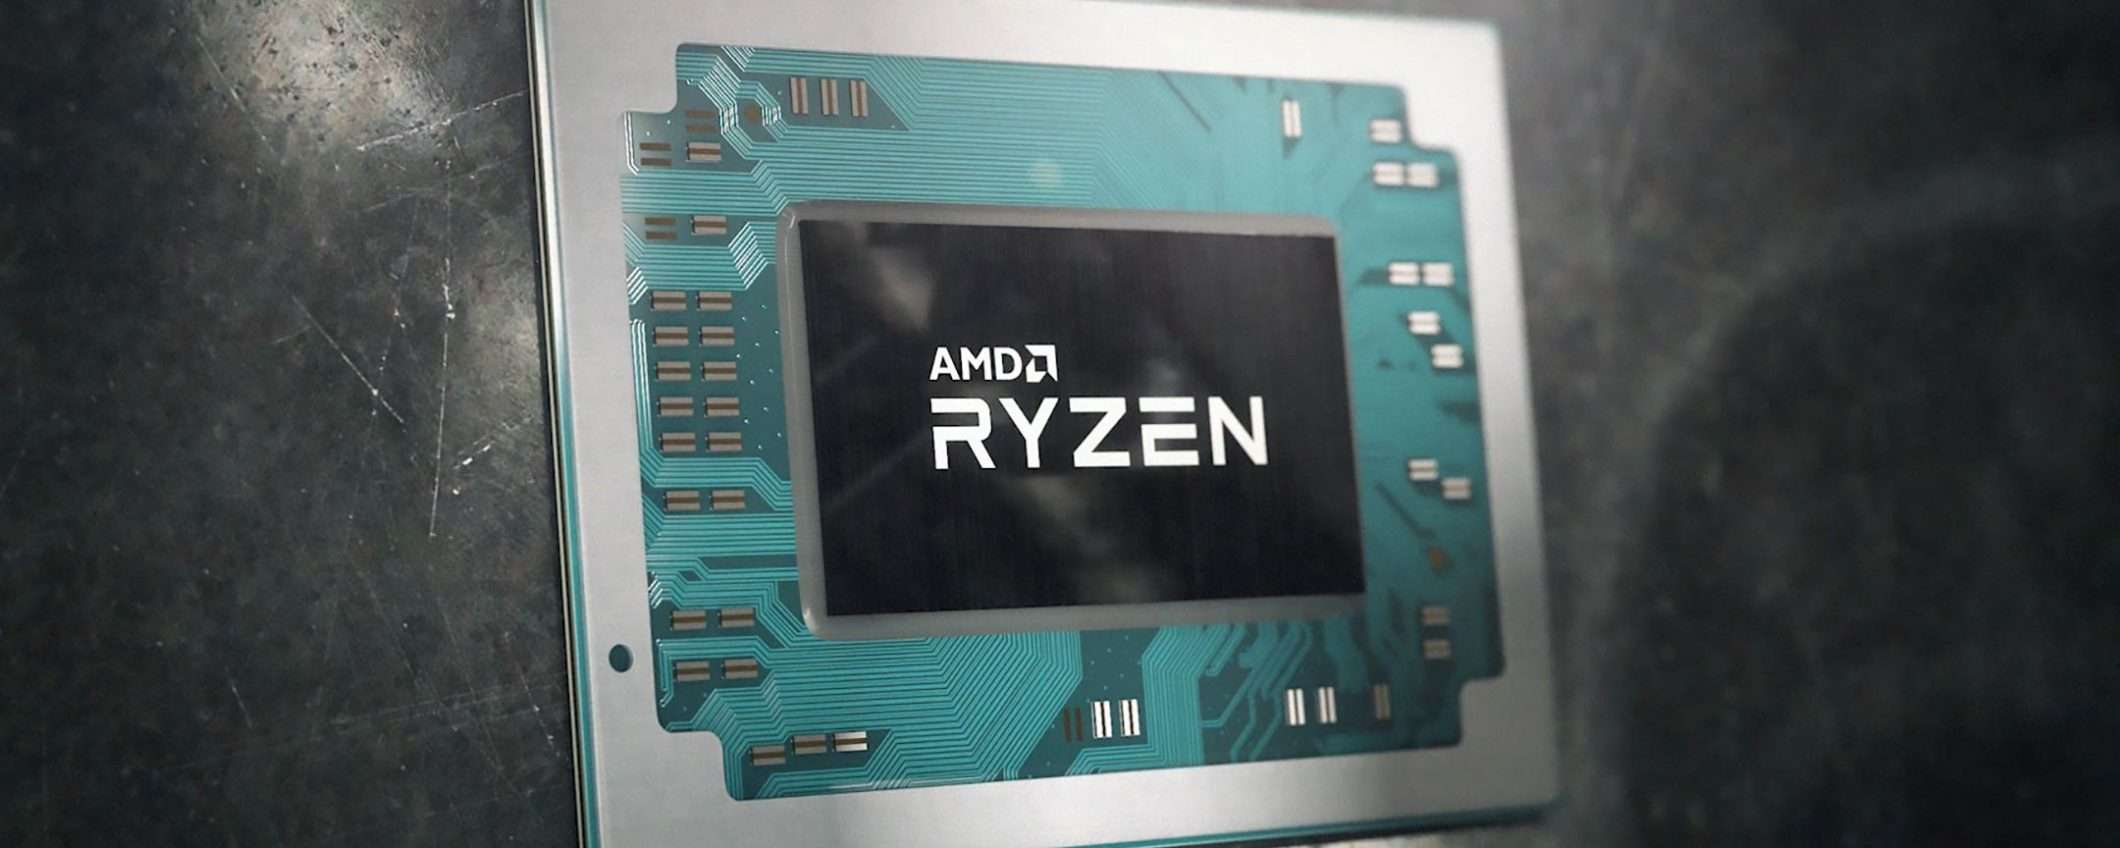 Computex 2019: AMD presenta la CPU Ryzen 3900X